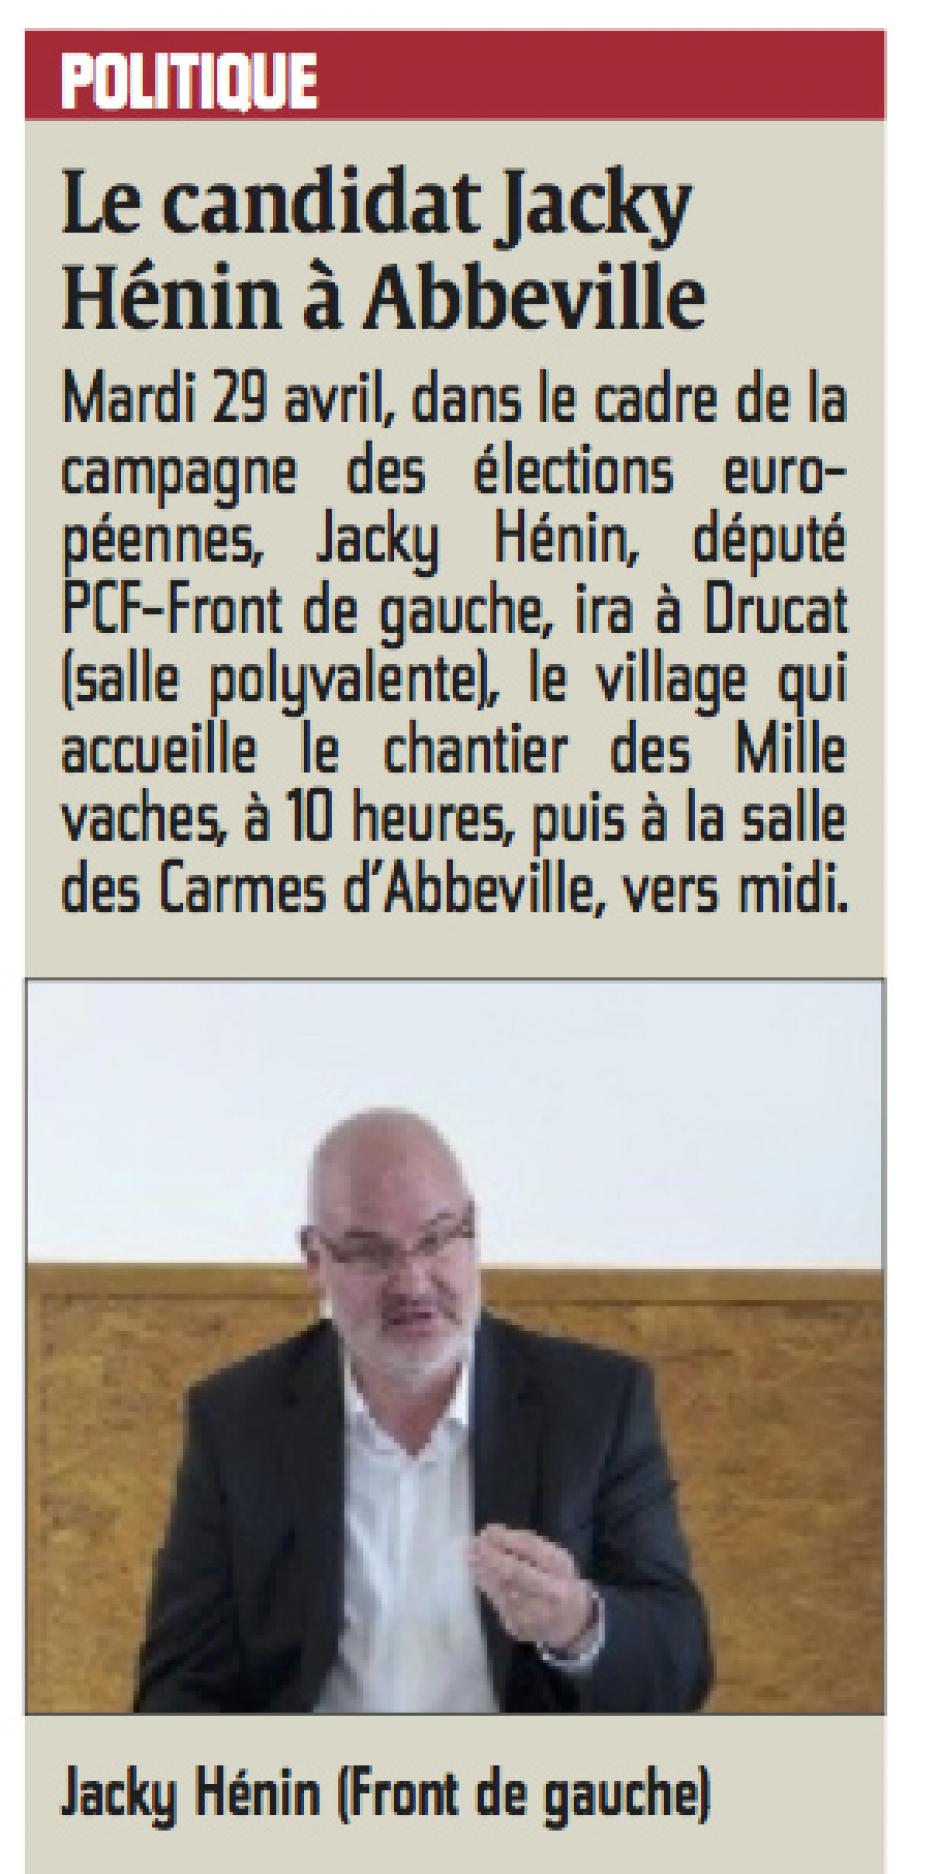 20140428-CP-Abbeville-Le candidat Jacky Hénin à Abbeville mardi